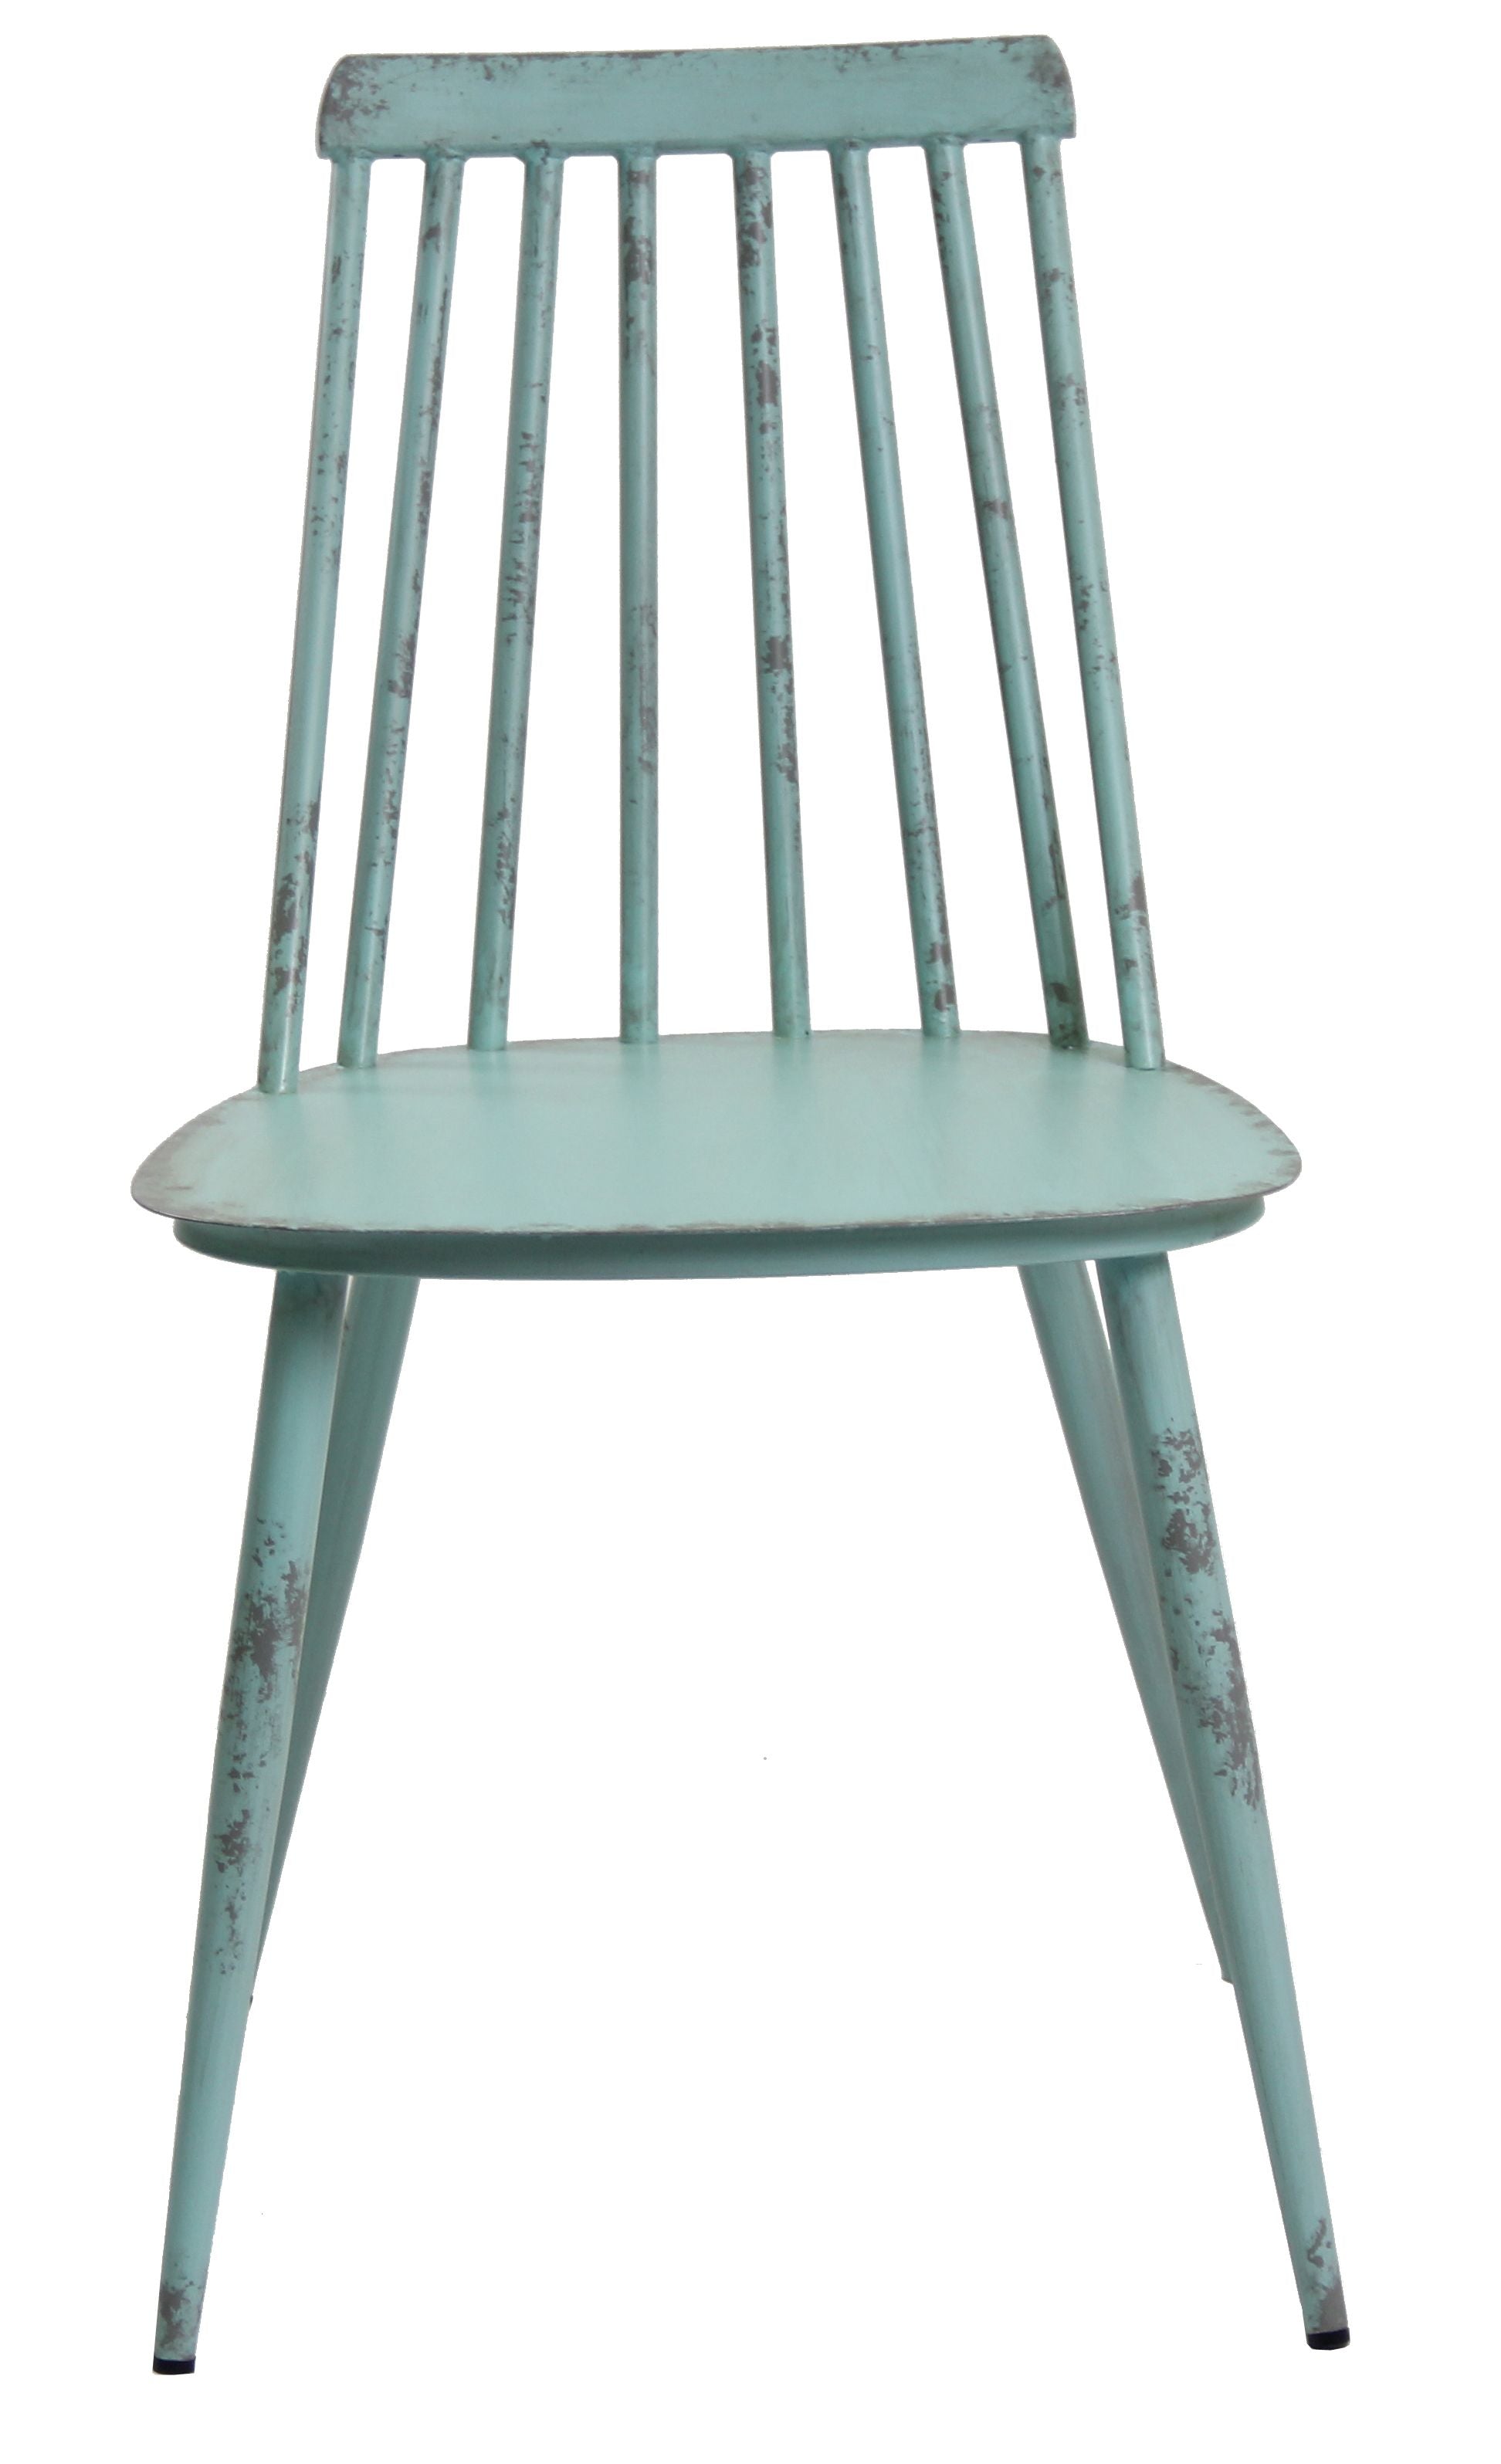 Aluminium Dinning Chair Retro Blue Set of 2